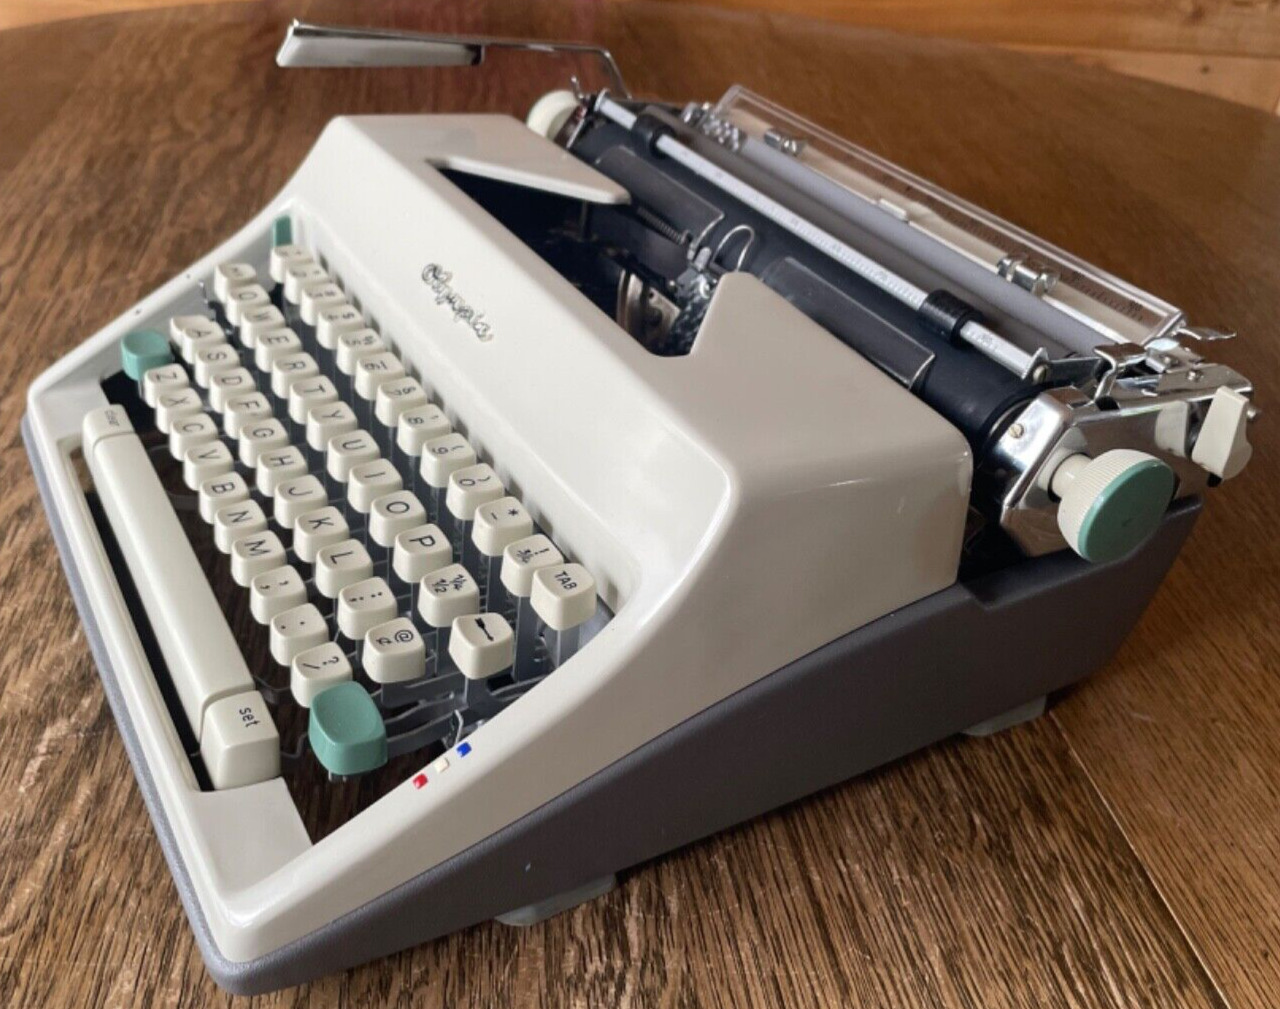 1965 Olympia SM9 Typewriter Very Good Cond. Elite Typeface.